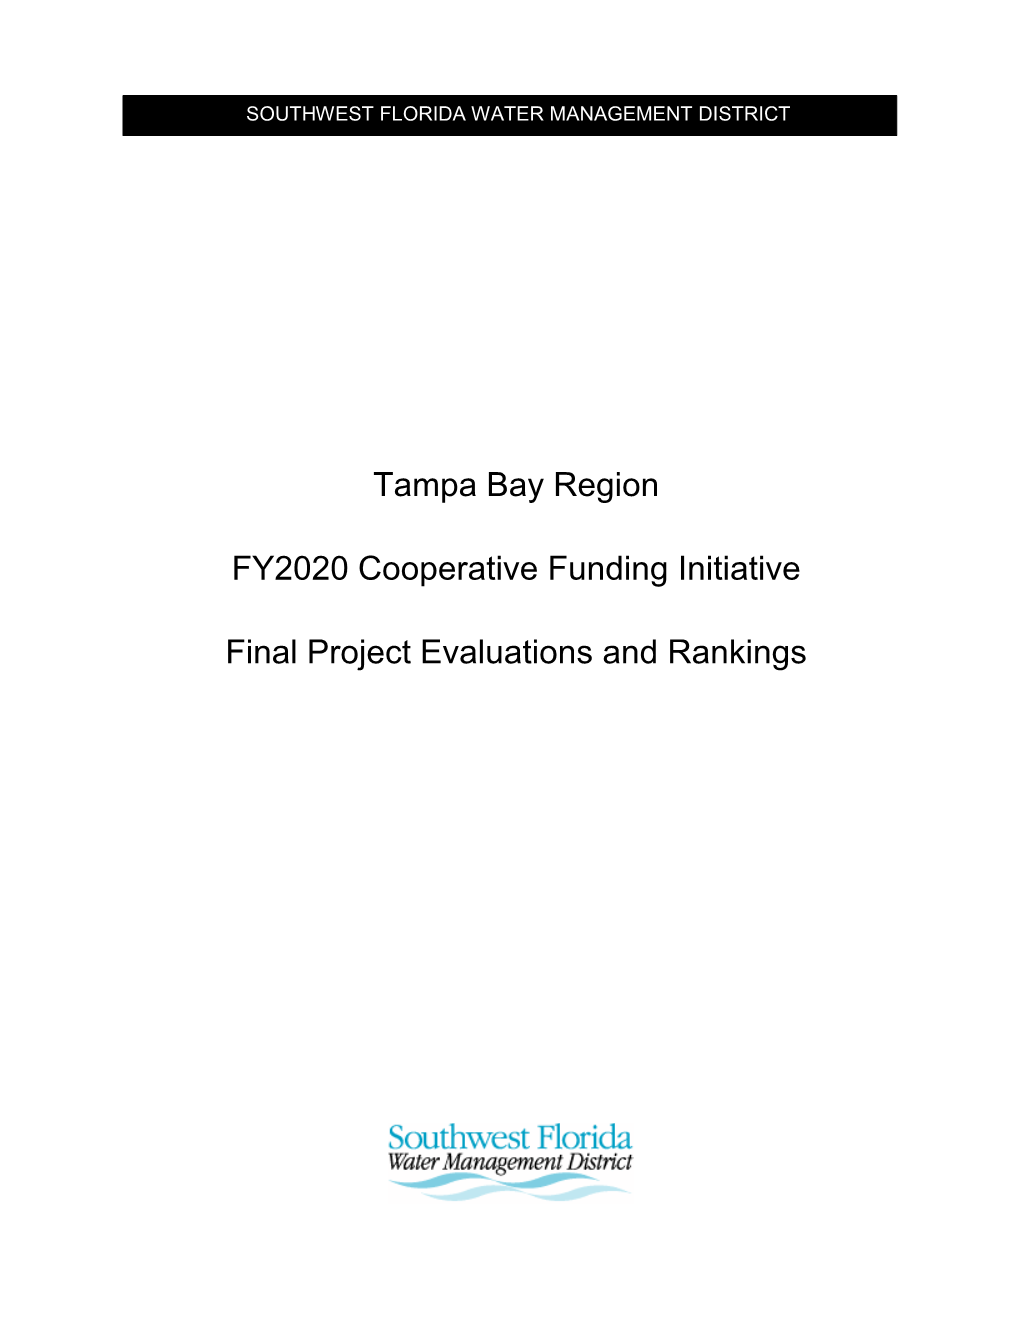 Tampa Bay Region FY2020 Cooperative Funding Initiative Final